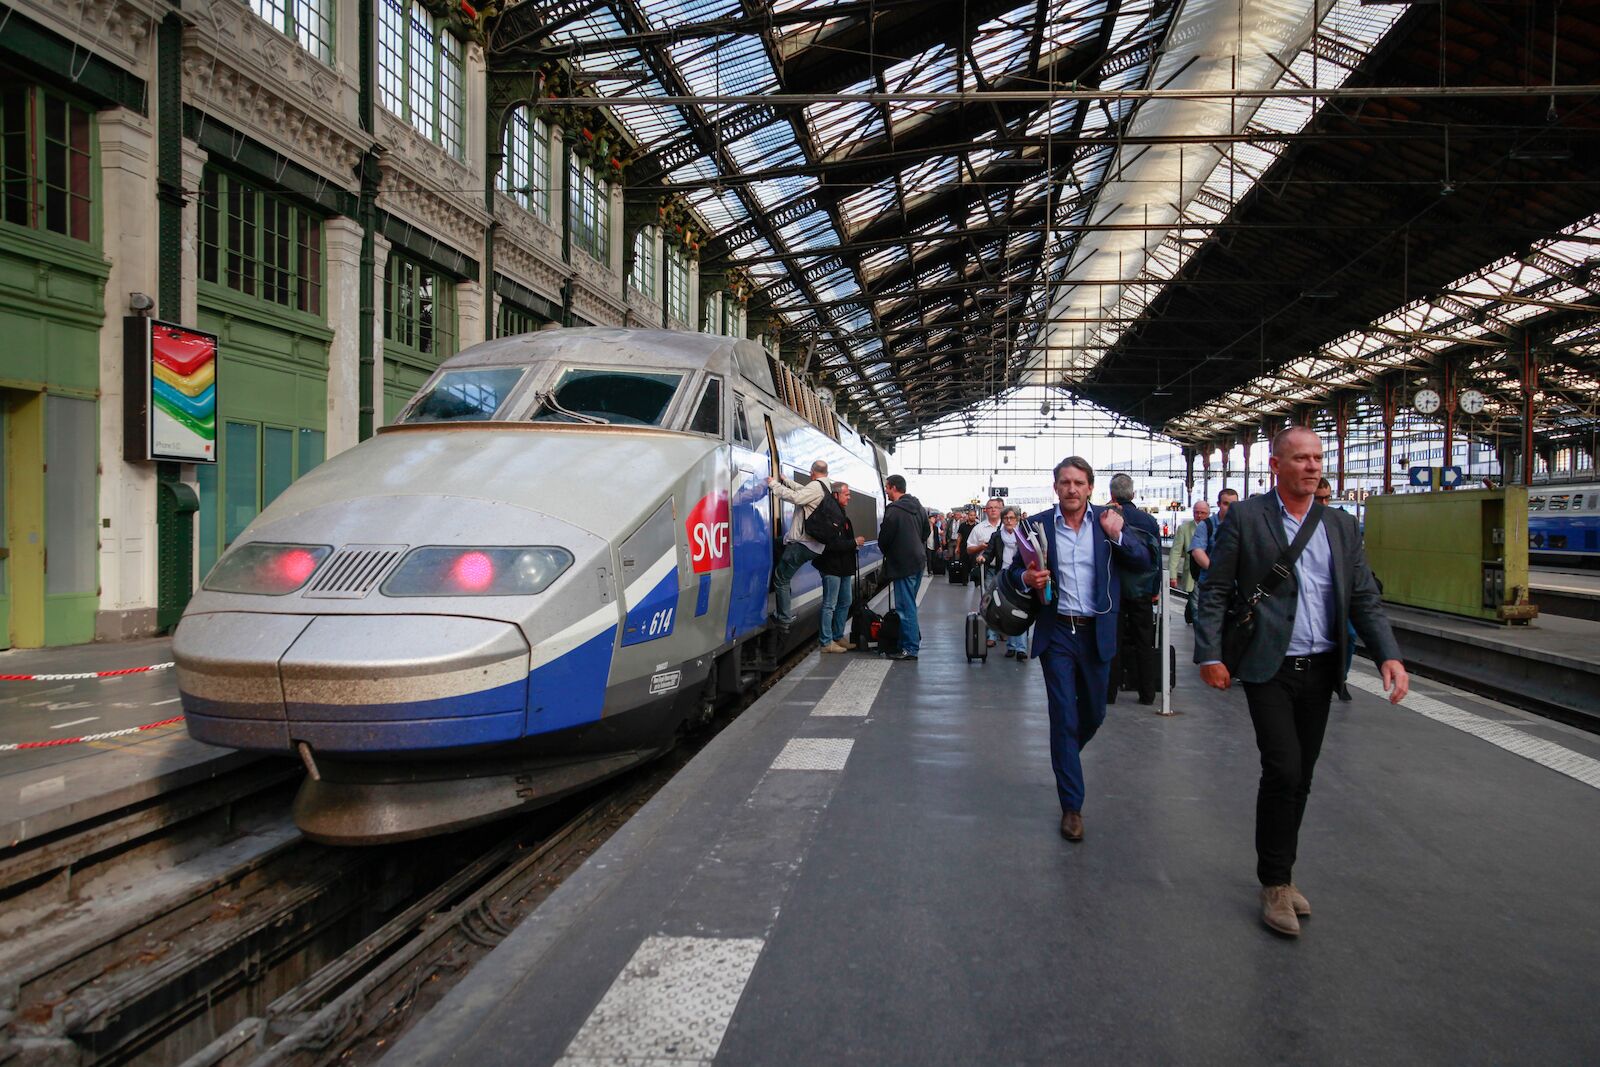 TGV high-speed train in Gare de Lyon in Paris